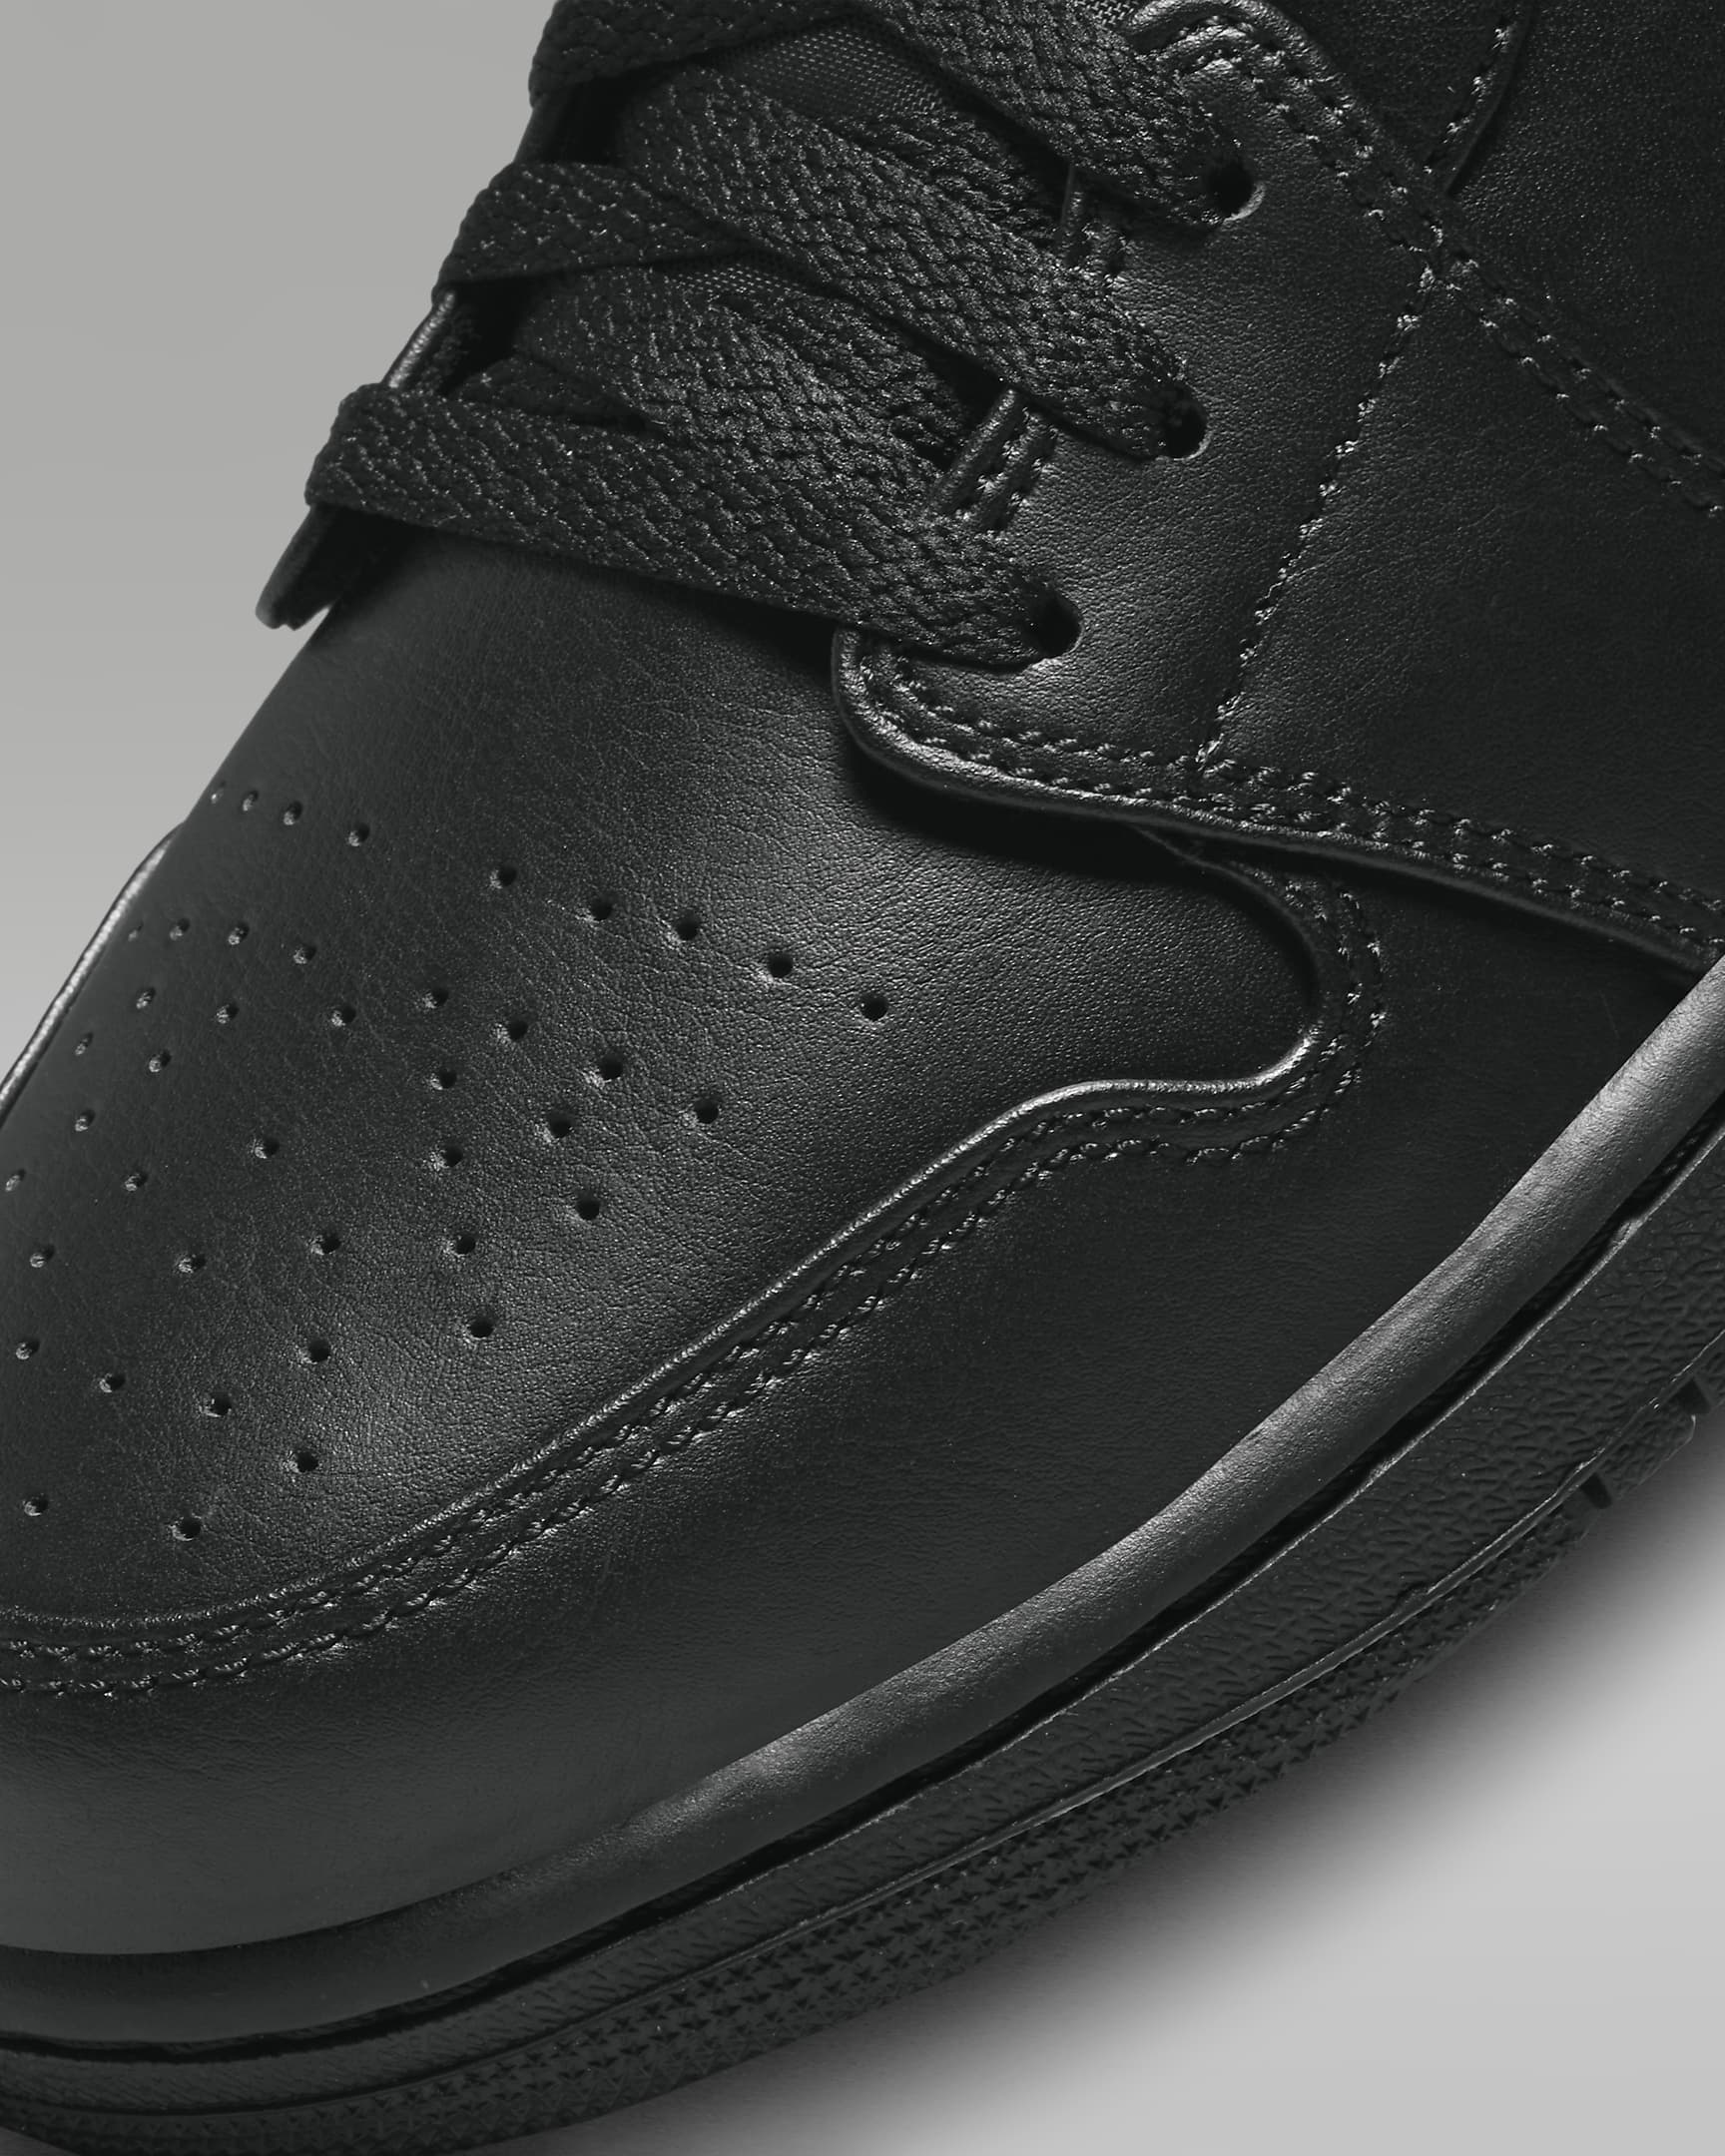 Air Jordan 1 Mid Shoes - Black/Black/Black